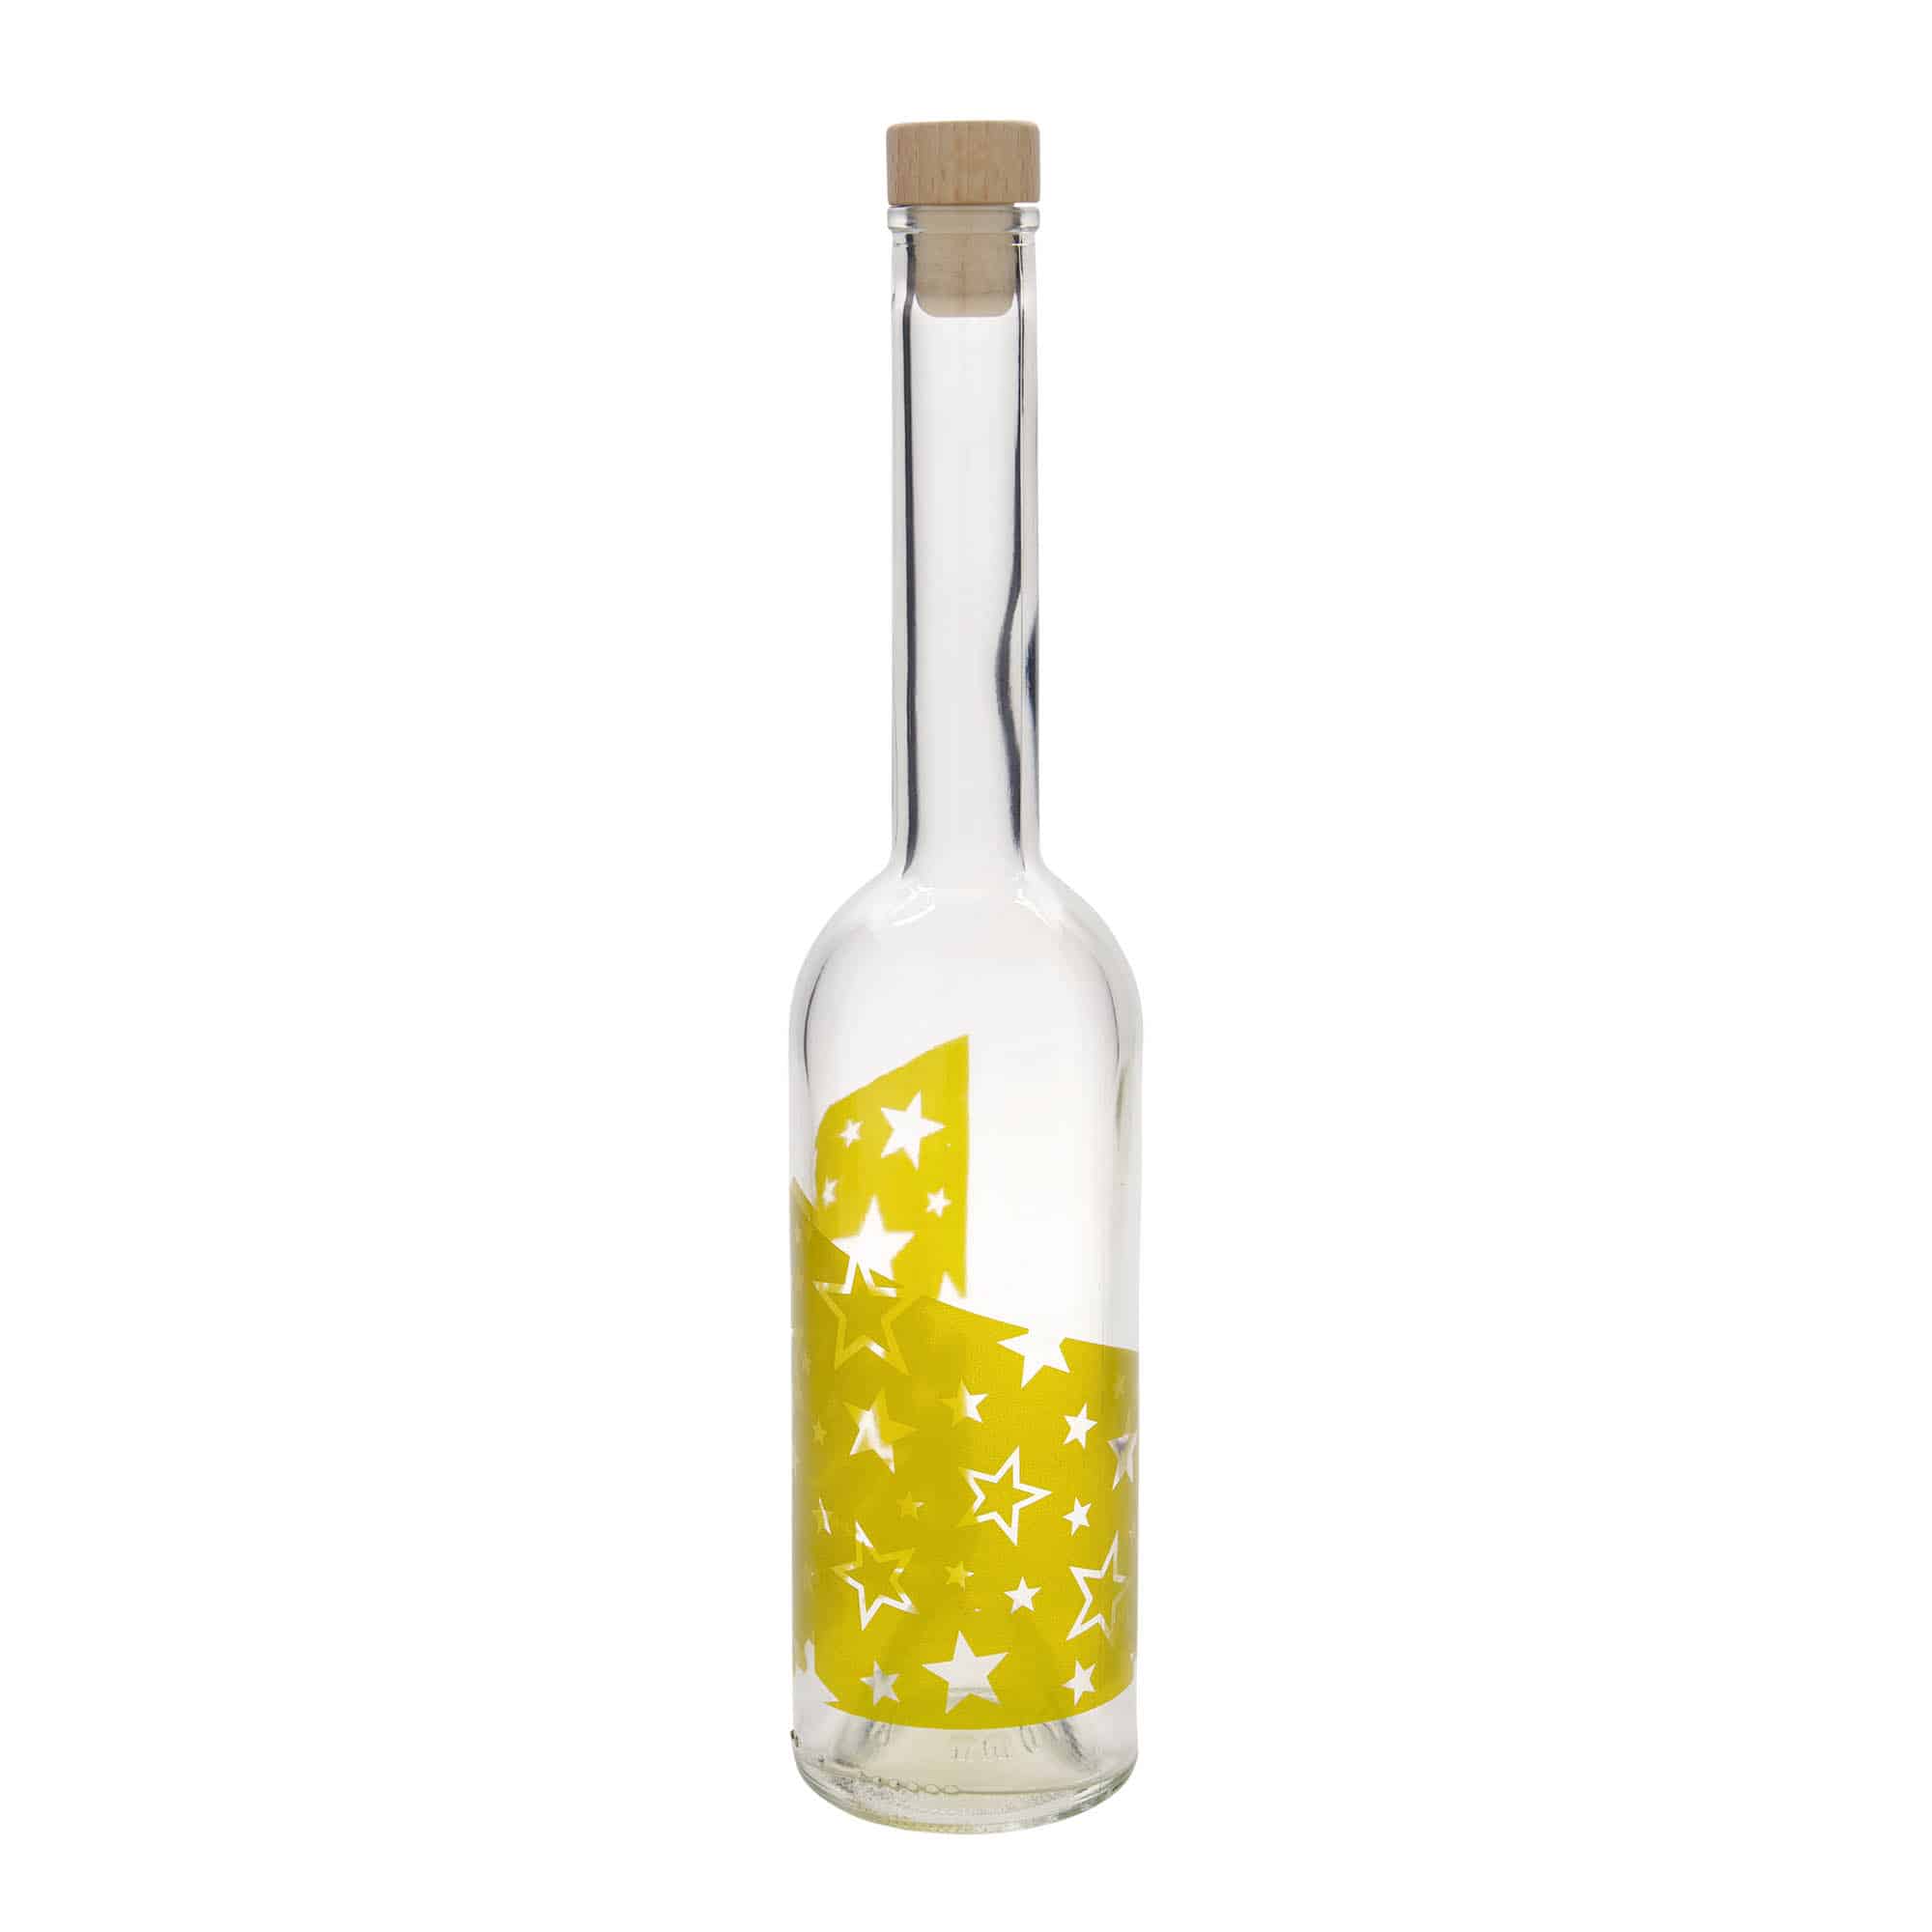 500 ml glass bottle 'Opera', print: gold stars, closure: cork